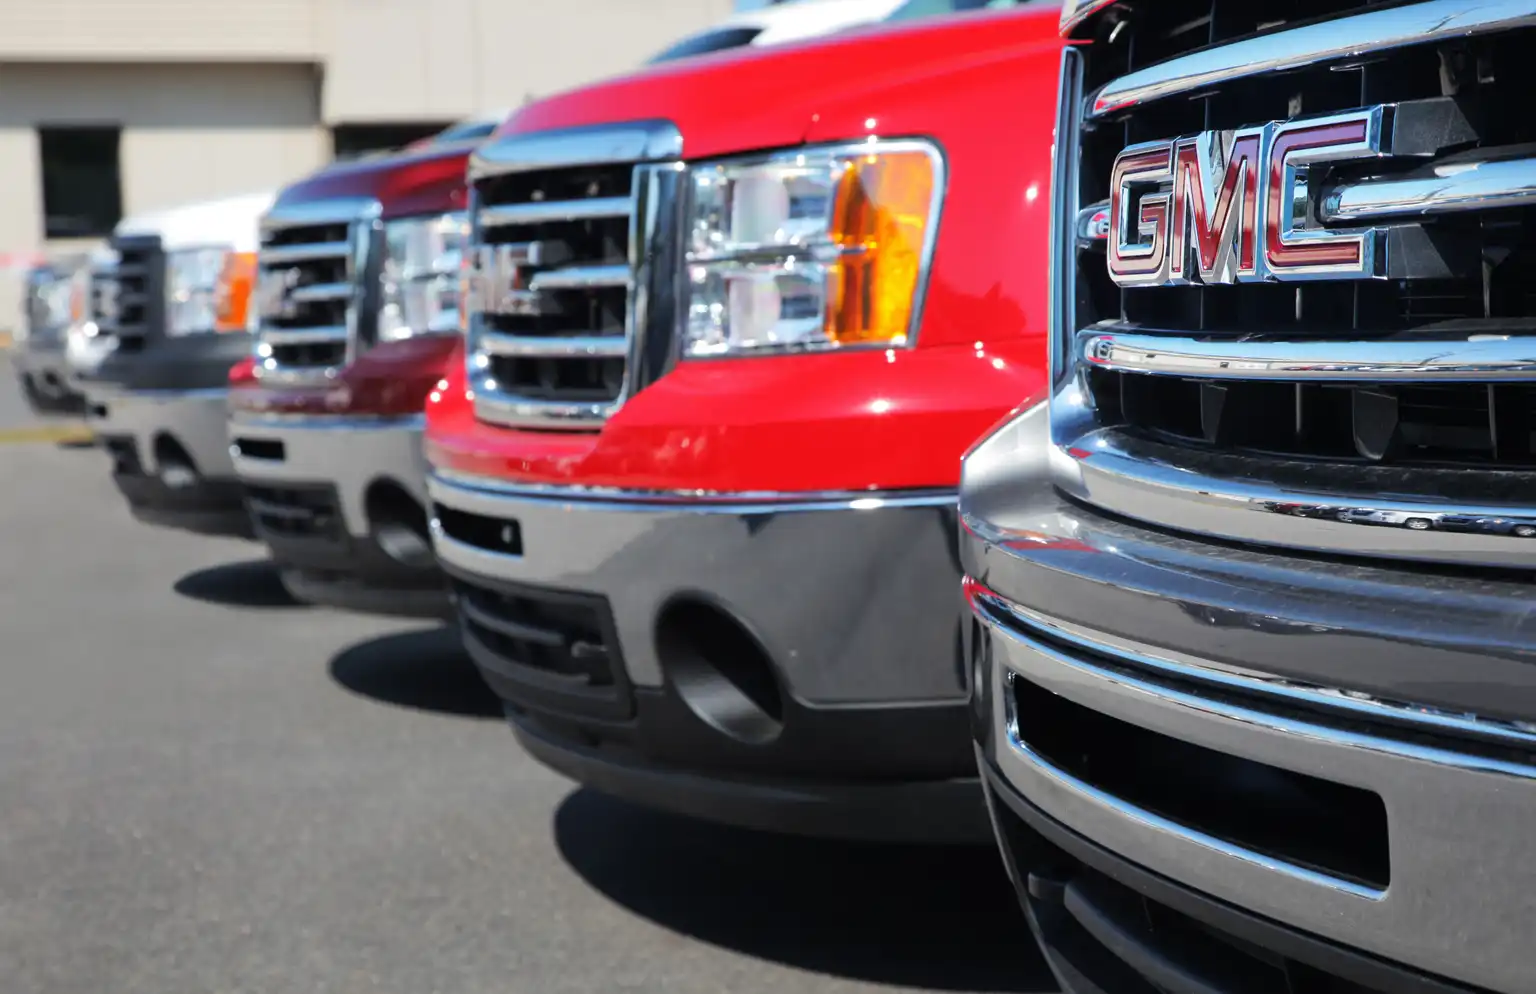 General Motors Q1 Earnings: Inside The Turnaround Tale And The Massive Buybacks - Seeking Alpha